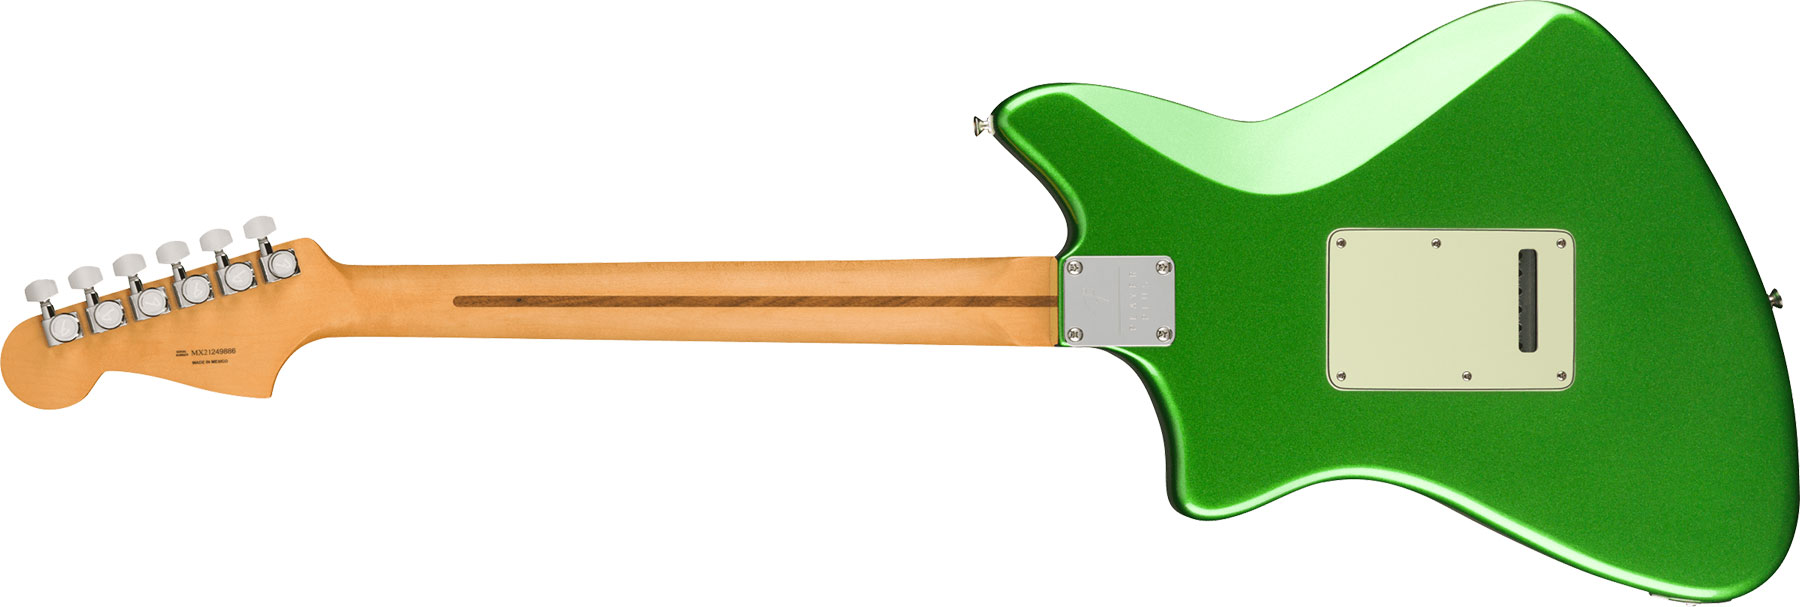 Fender Meteora Player Plus Hh Mex 2h Ht Pf - Cosmic Jade - Guitarra electrica retro rock - Variation 1